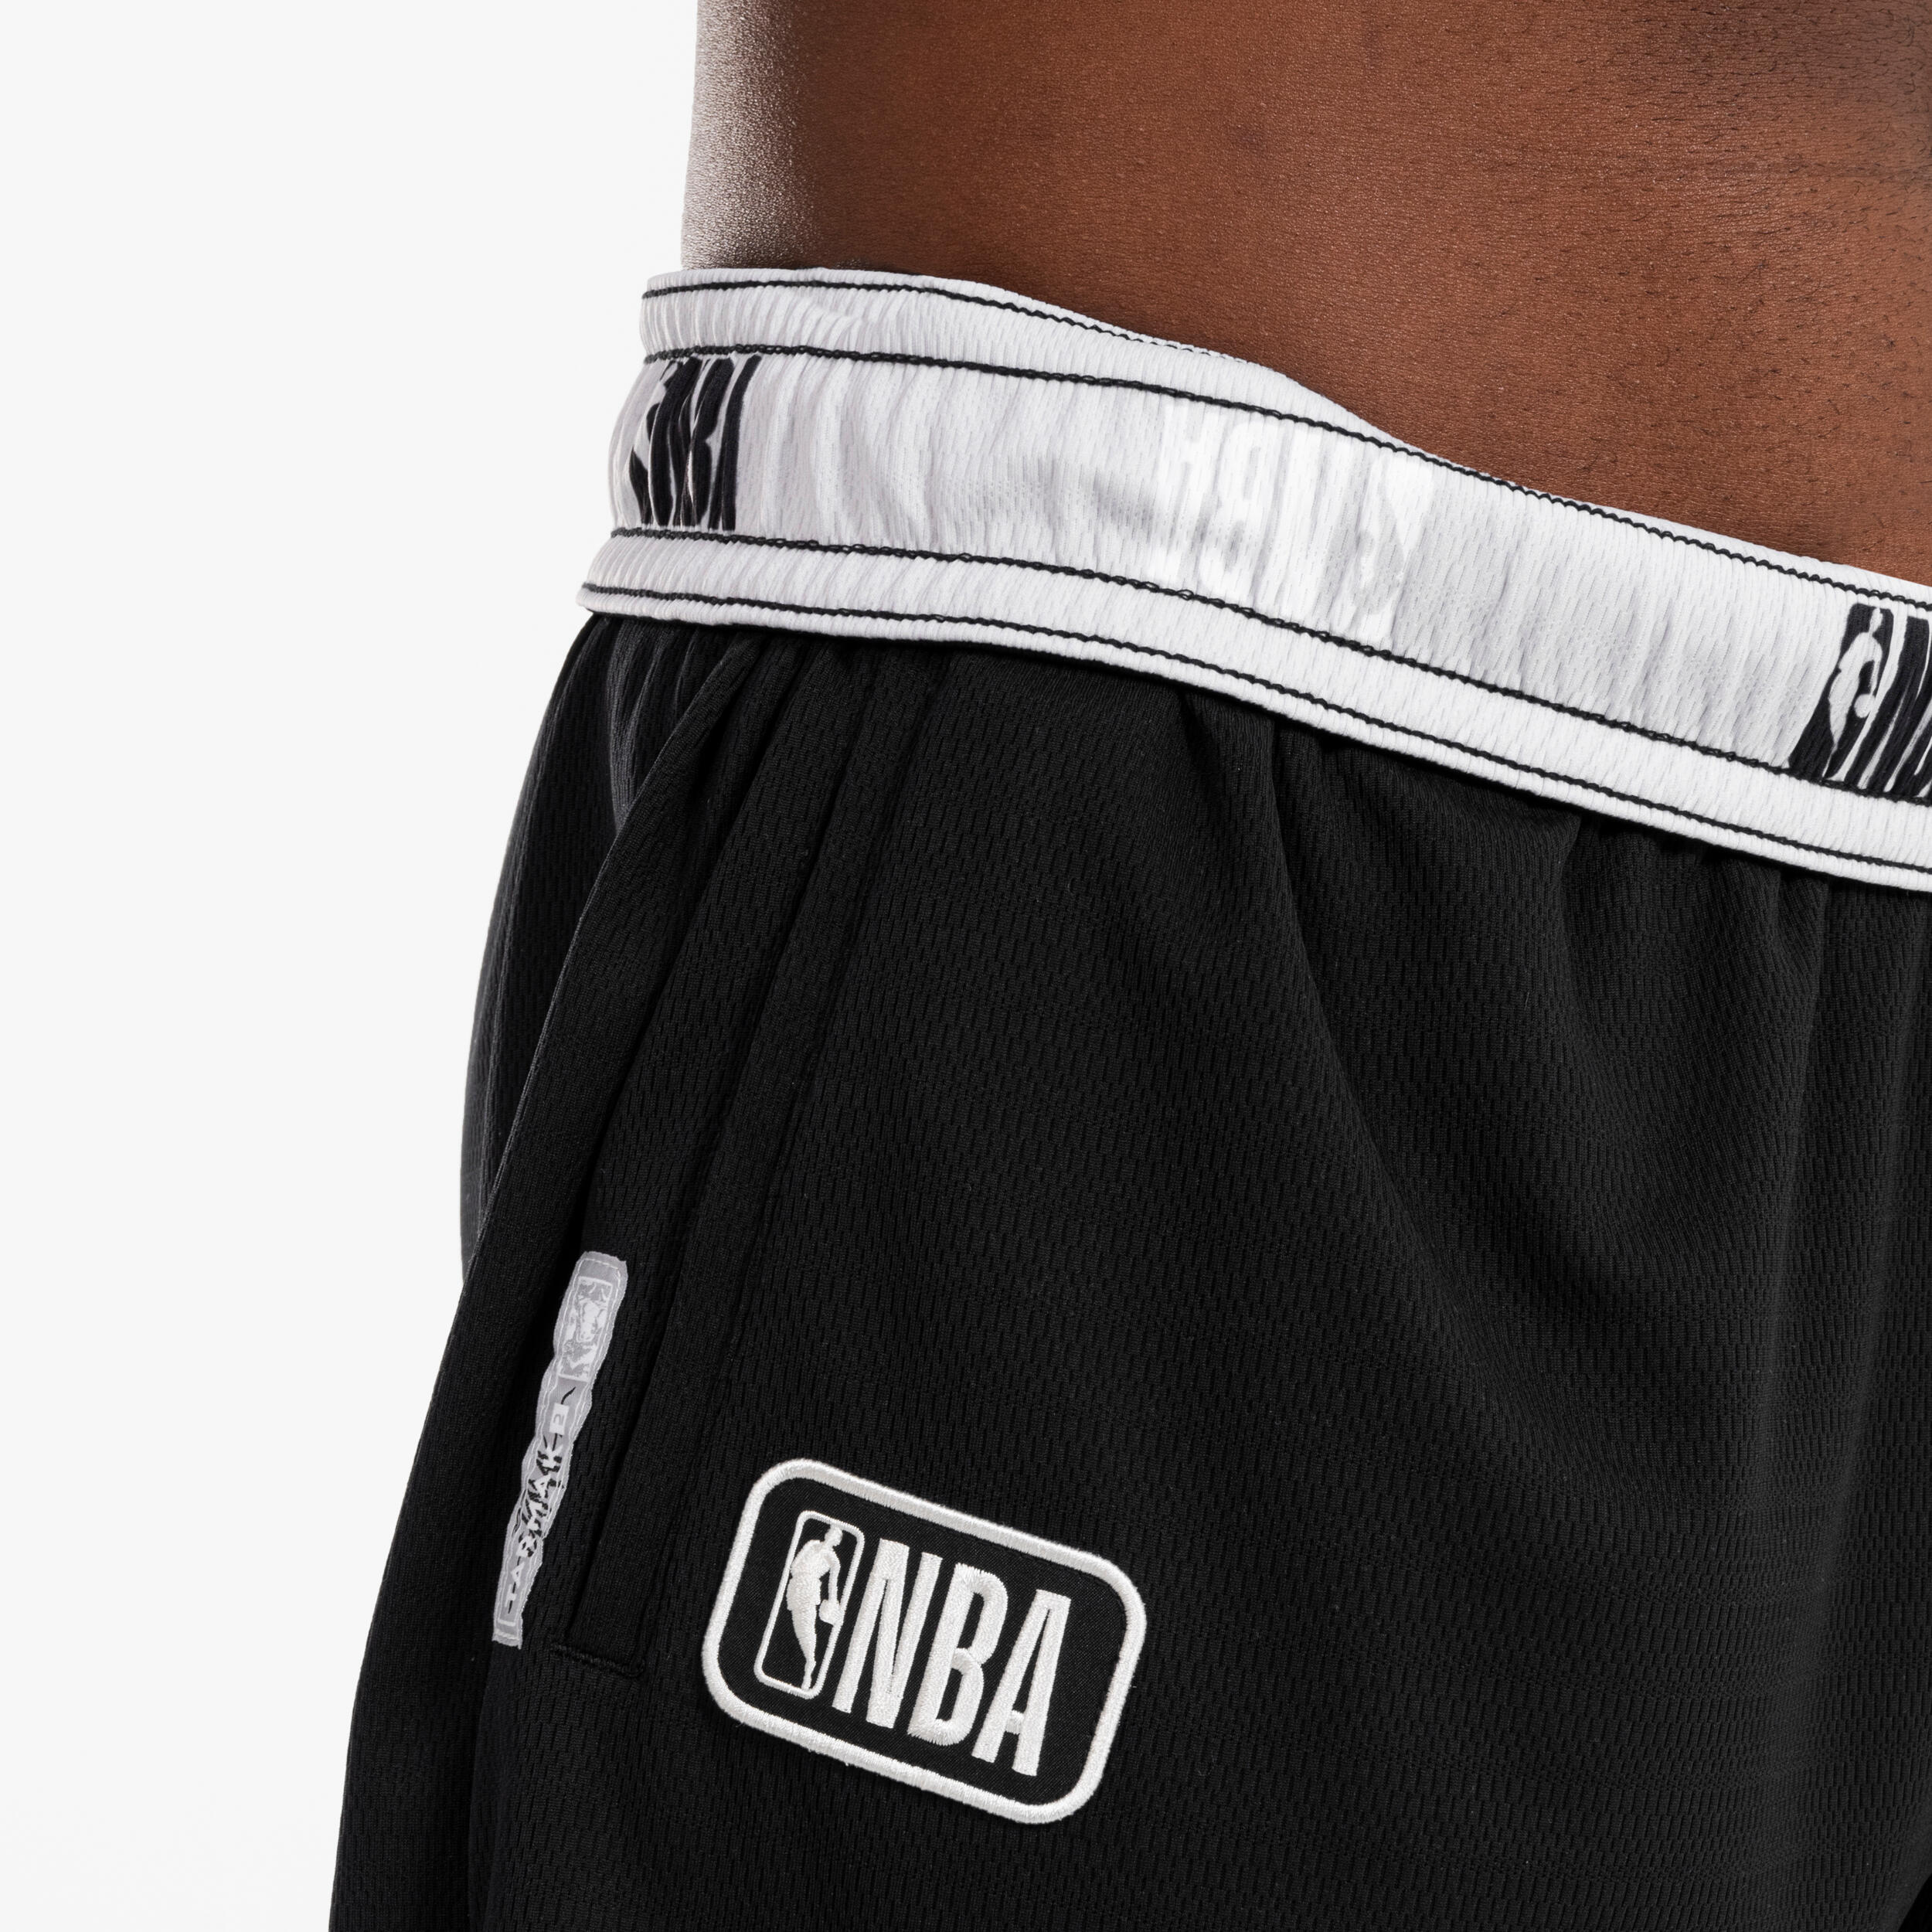 Men's/Women's Basketball Shorts NBA SH 900 - Black 7/8